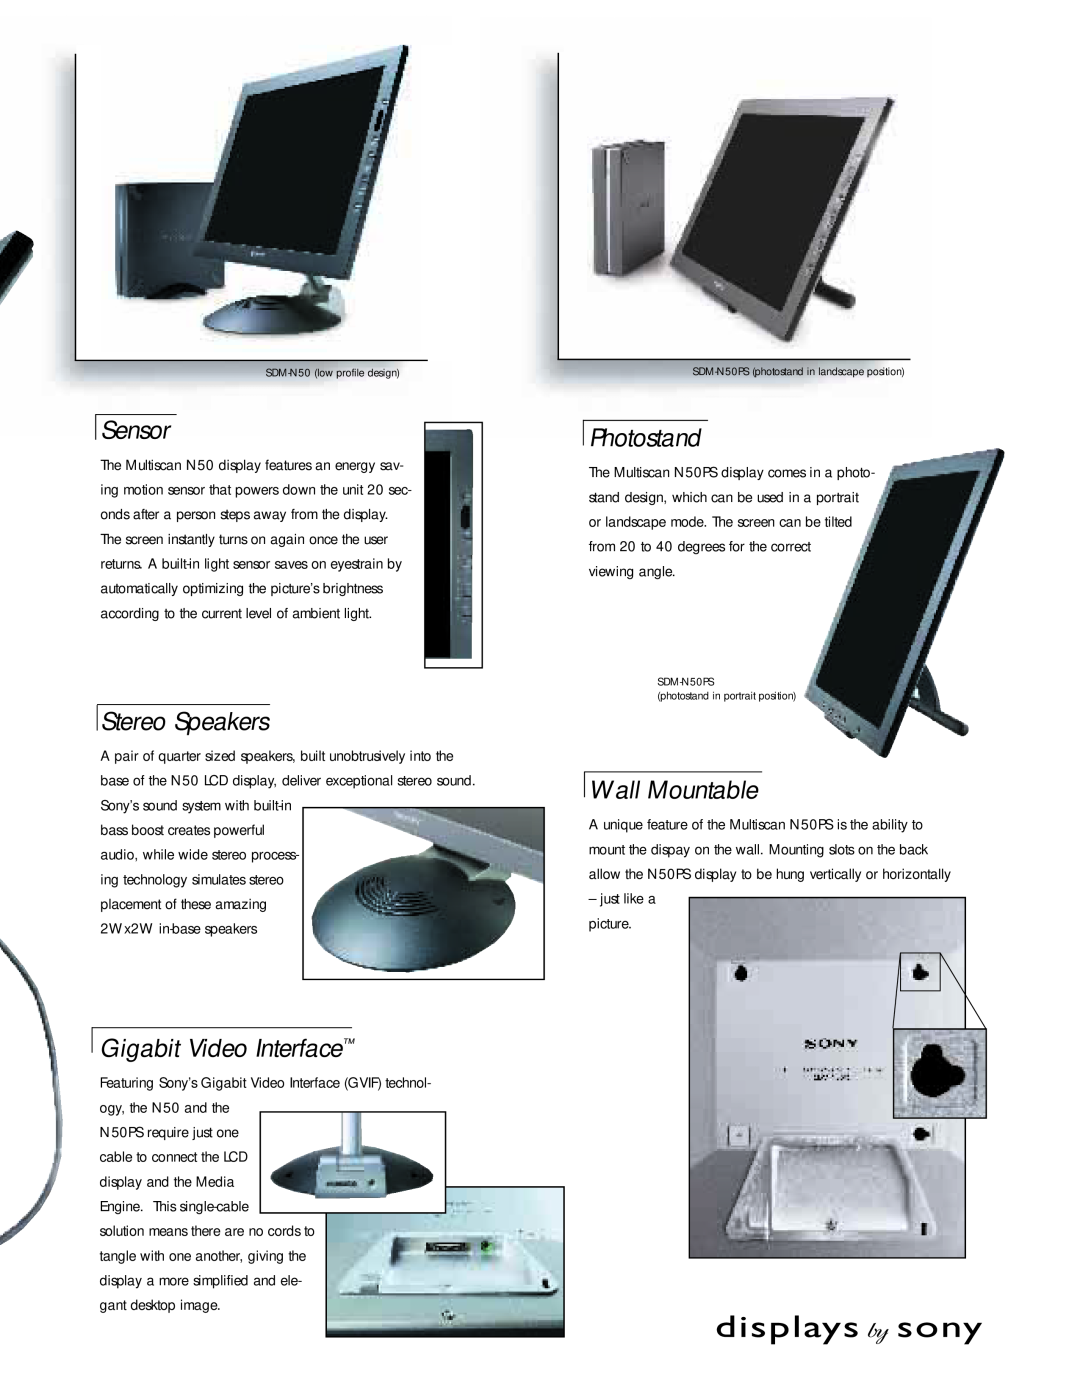 Sony SDM-N50PS manual Sensor, Stereo Speakers, Gigabit Video Interface, Photostand, Wall Mountable 